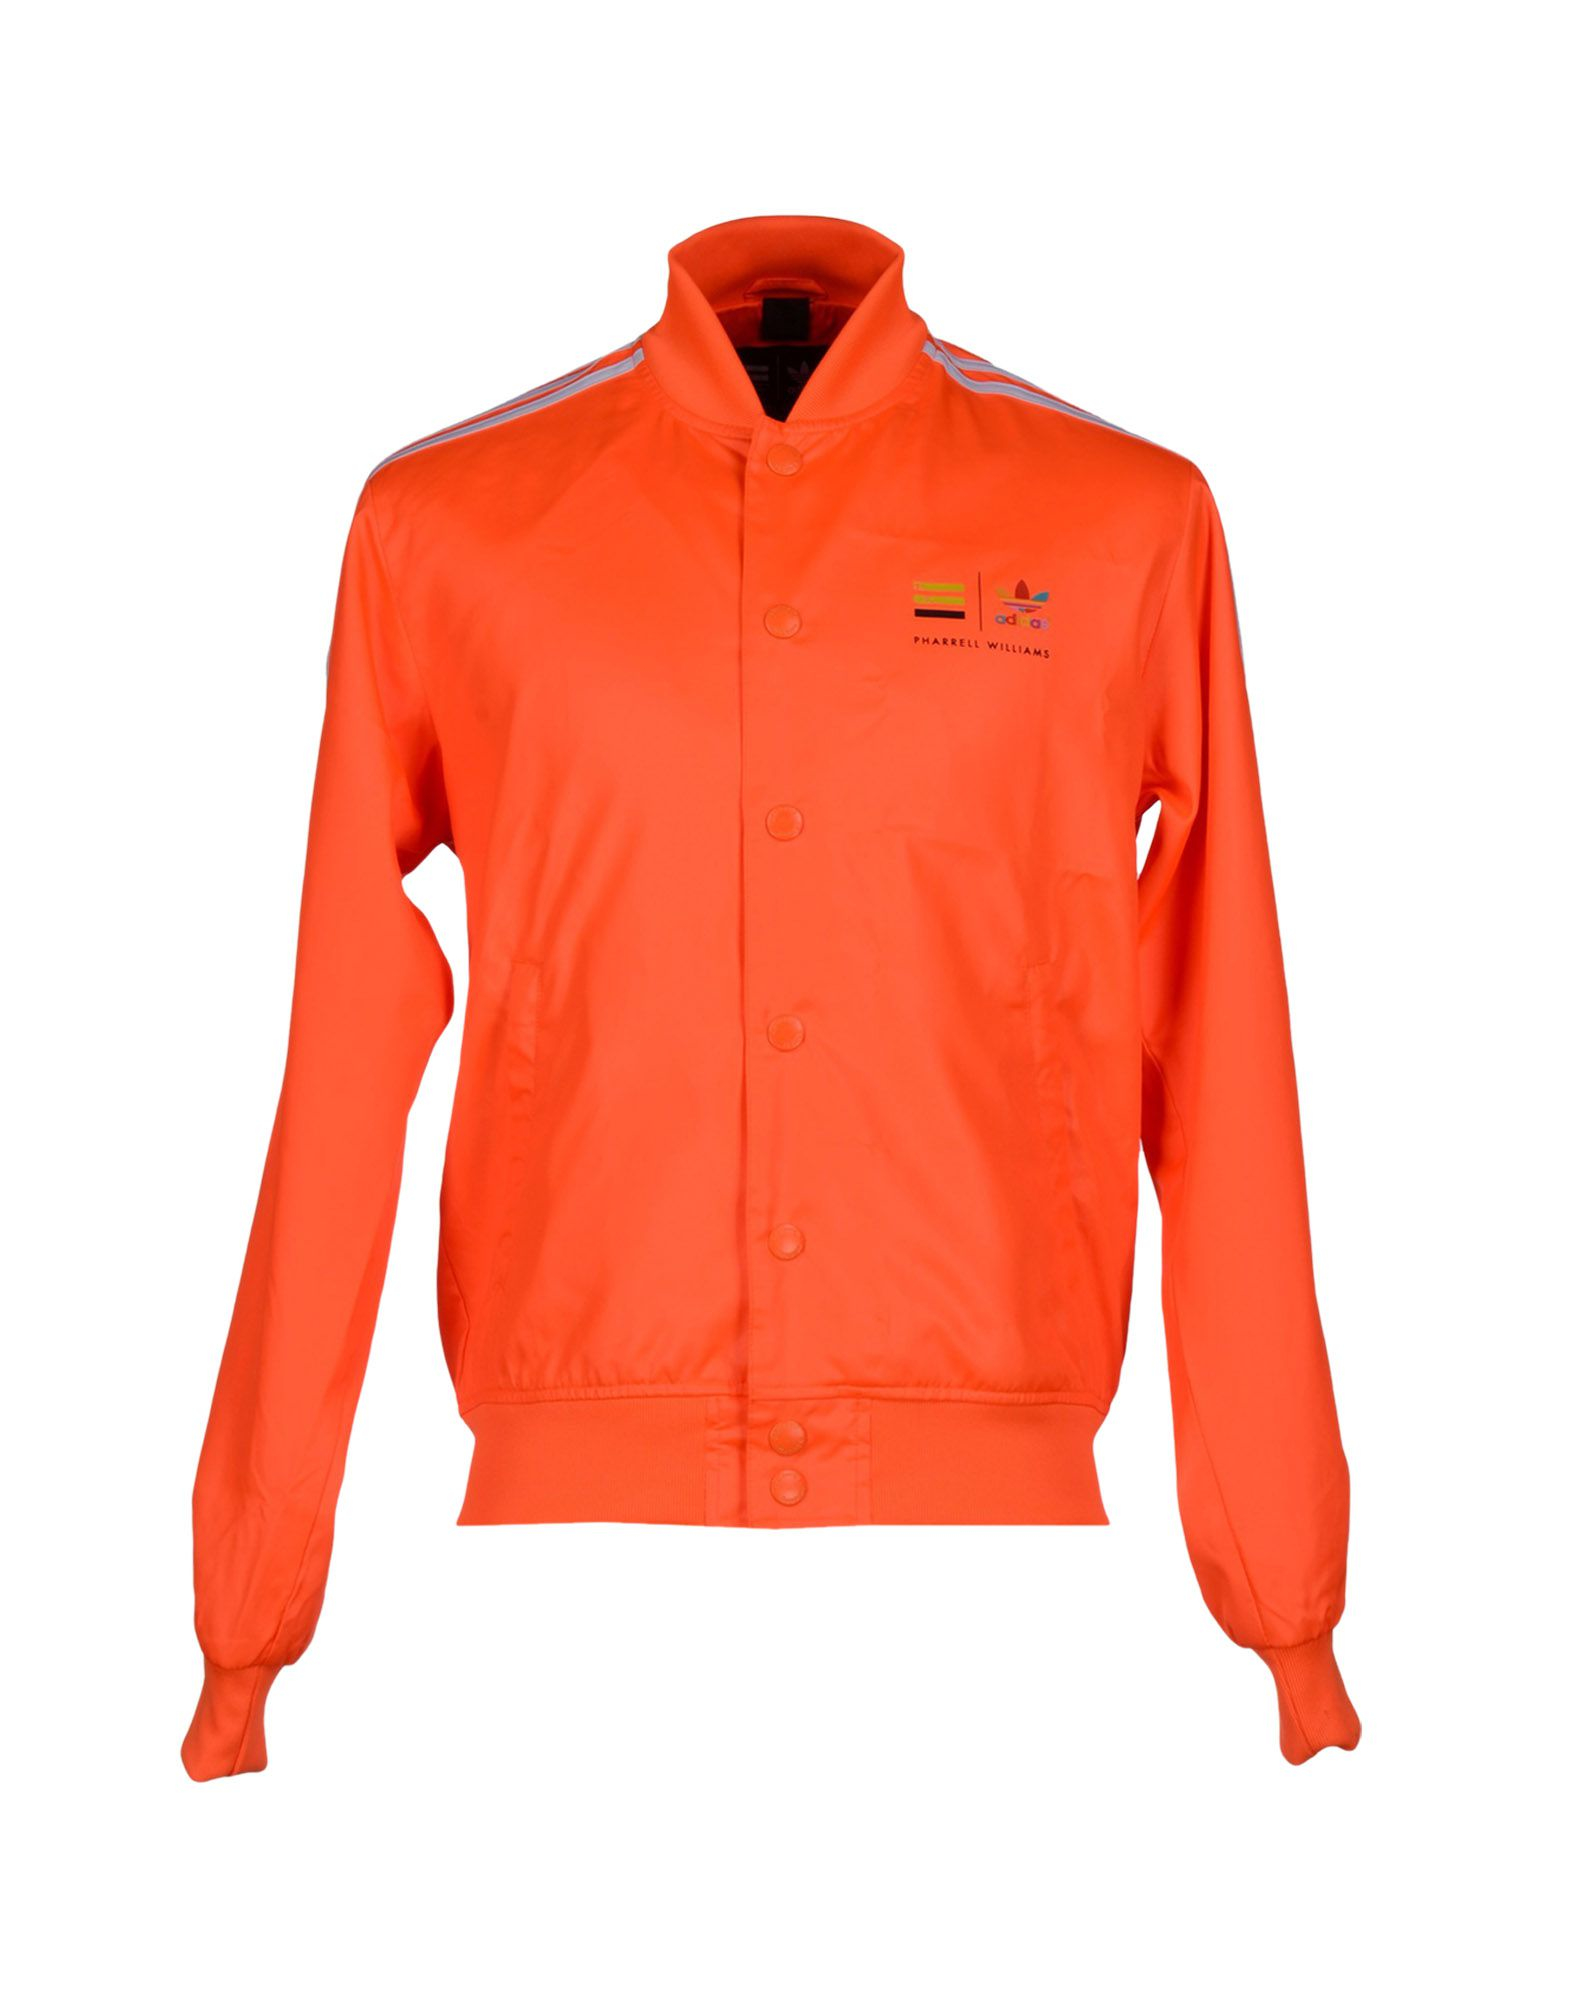 Lyst - adidas Jacket in Orange for Men